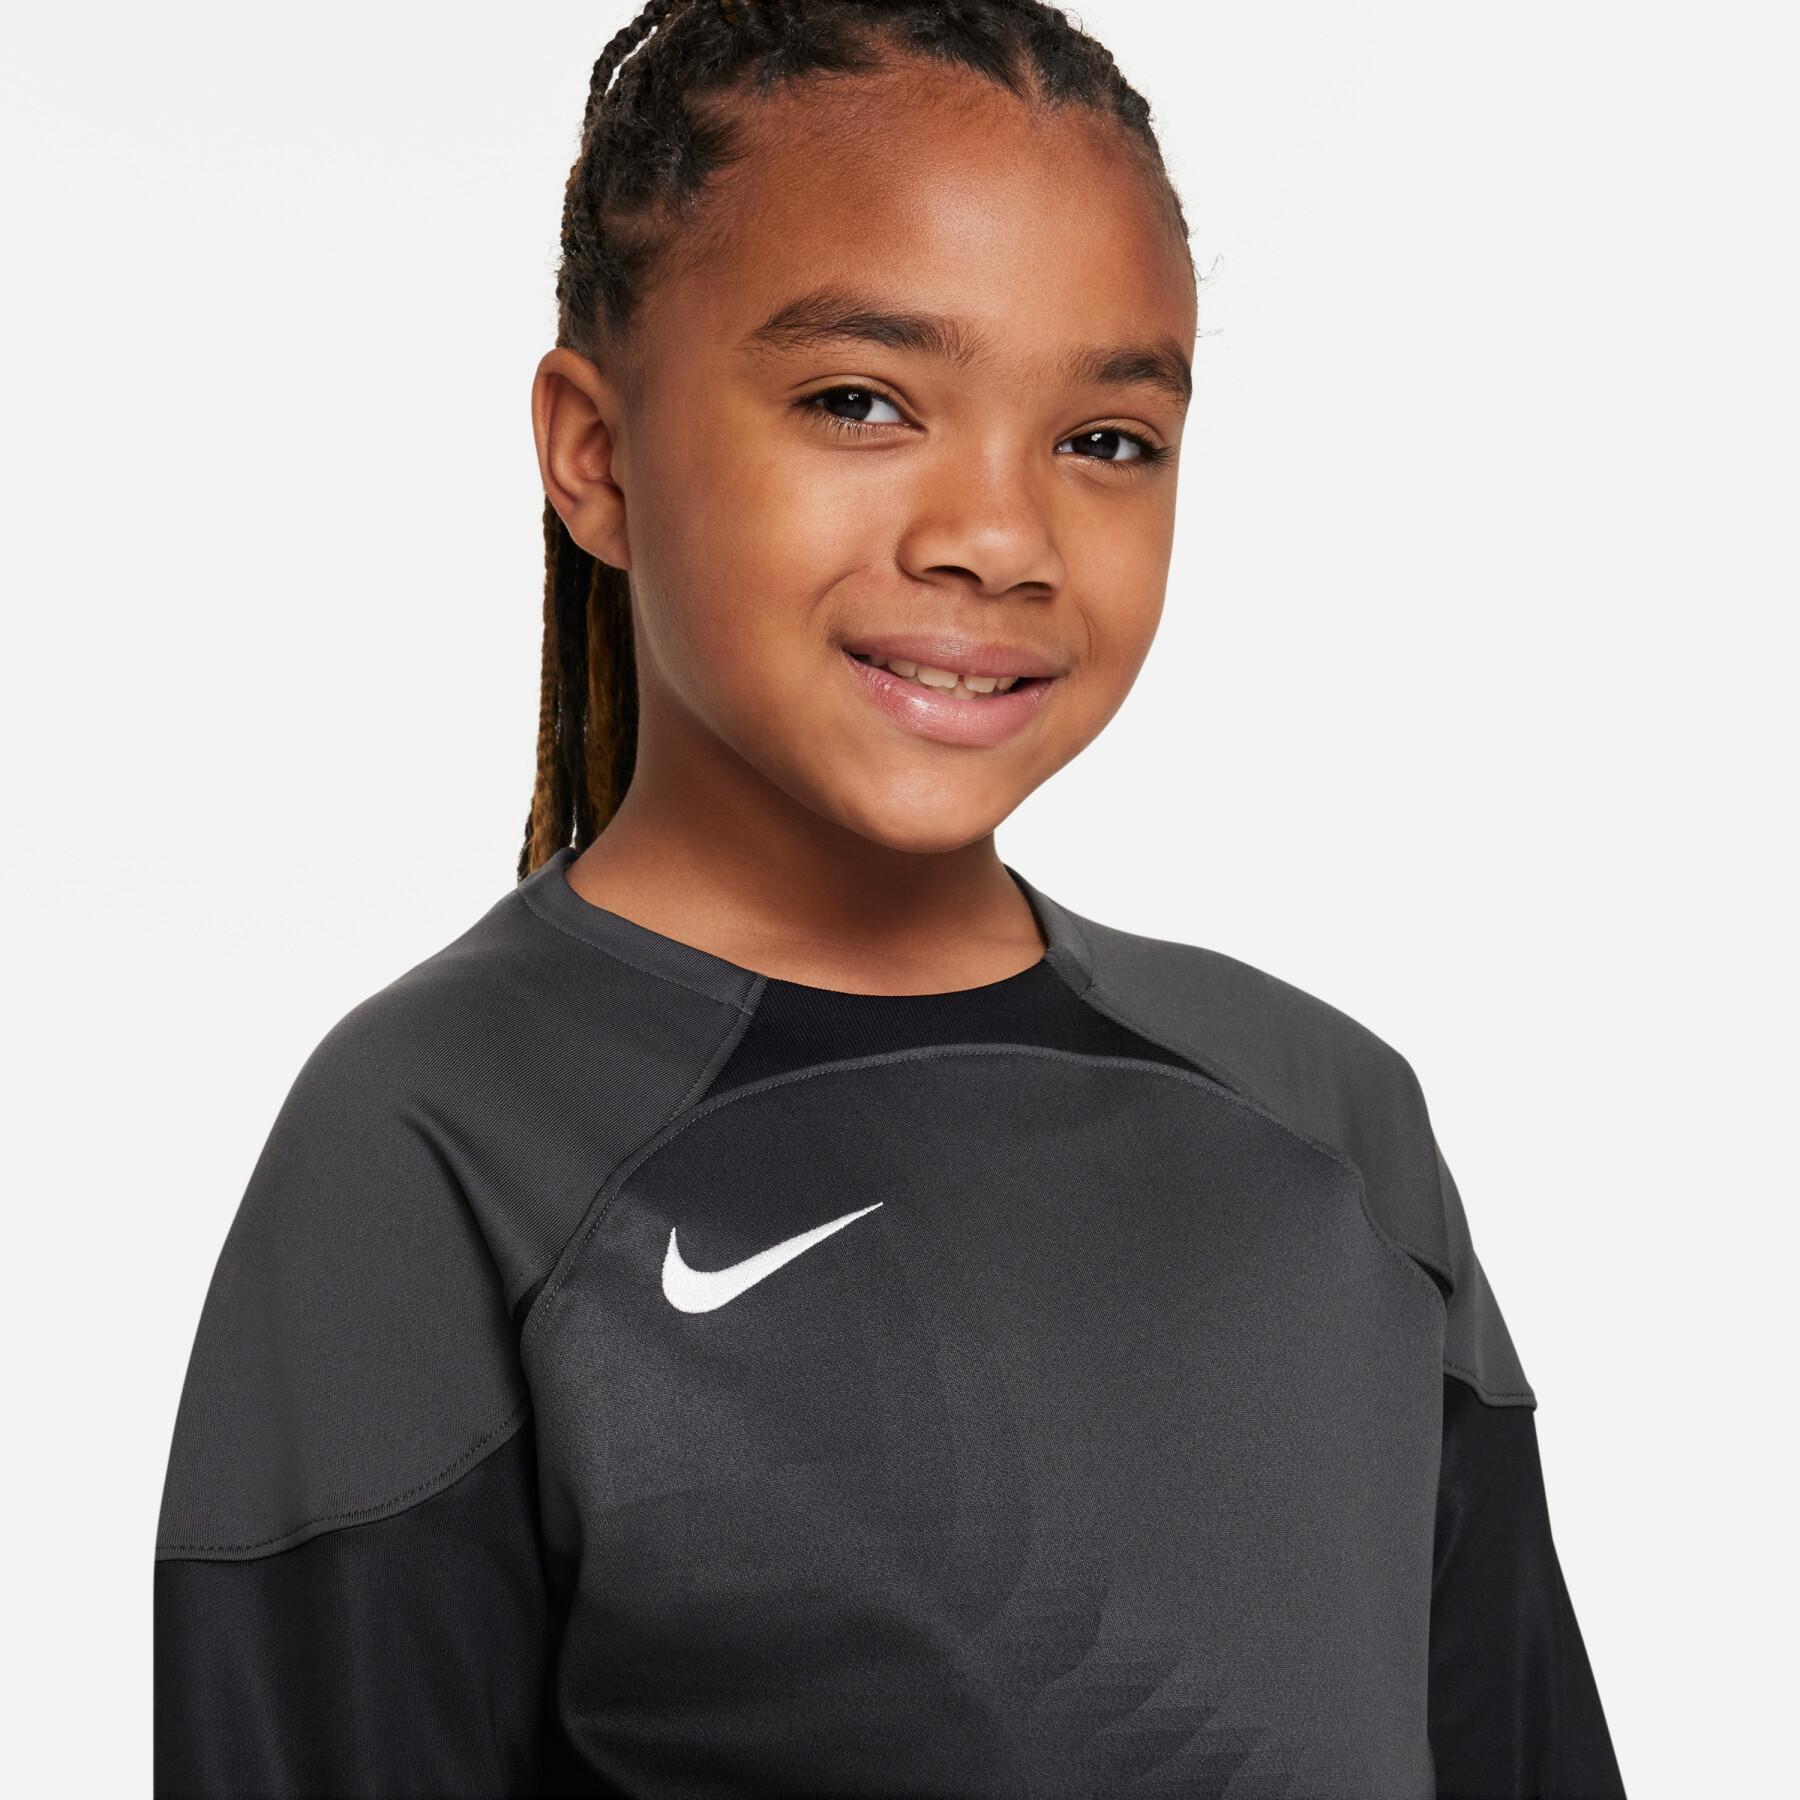 Koszulka dziecięca Nike Dri-FIT ADV Gardien 4 Goalkeeper